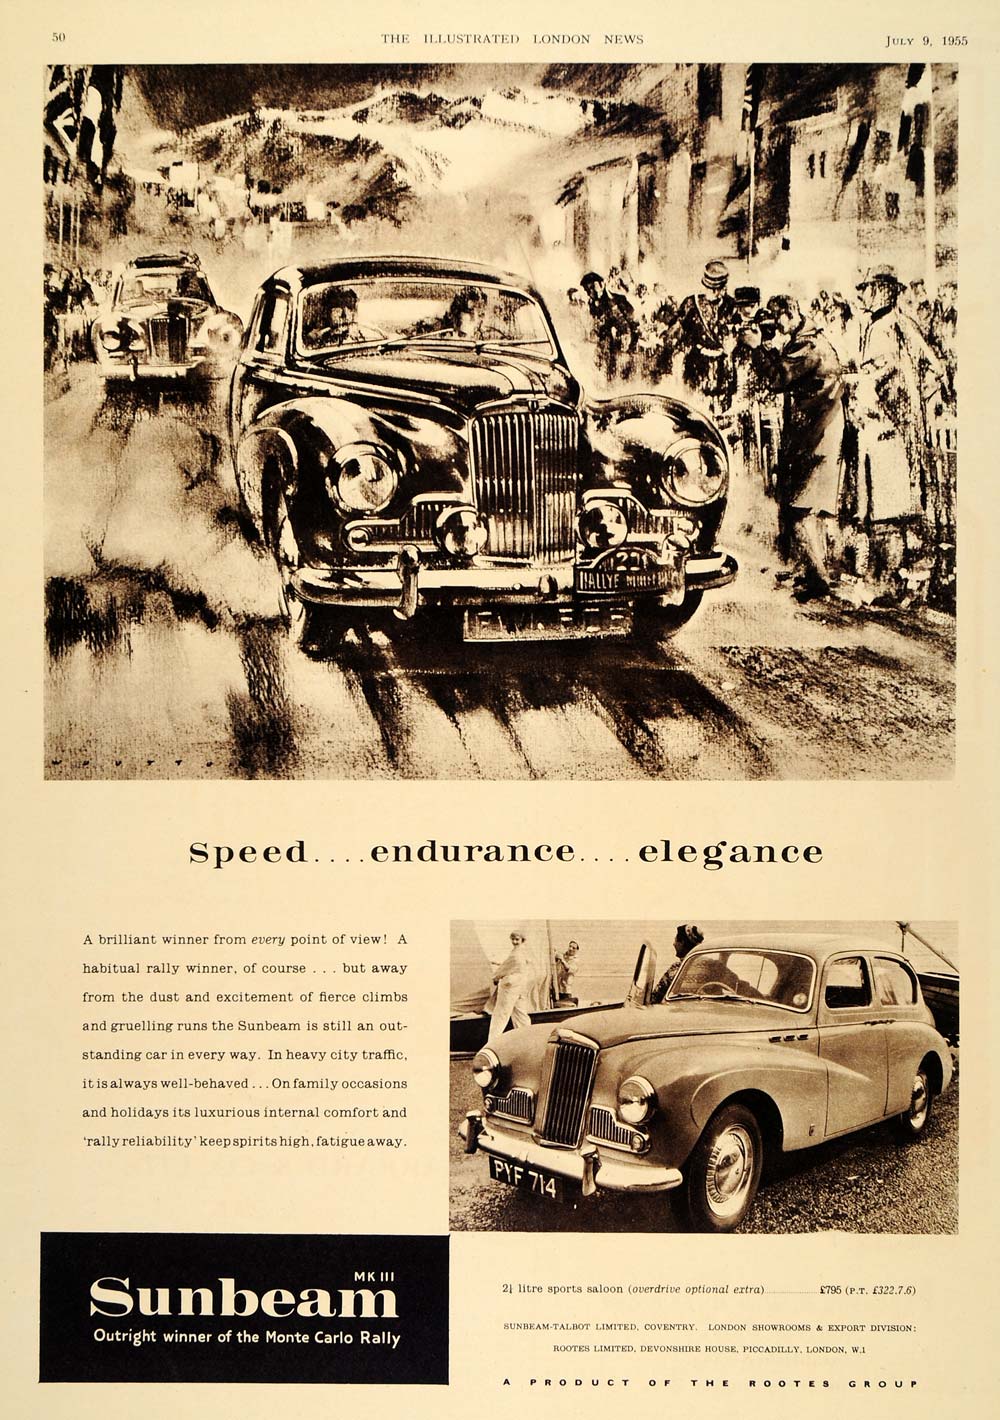 1955 Ad Sunbeam Mk III Sports Saloon Monte Carlo Rally - ORIGINAL LN1